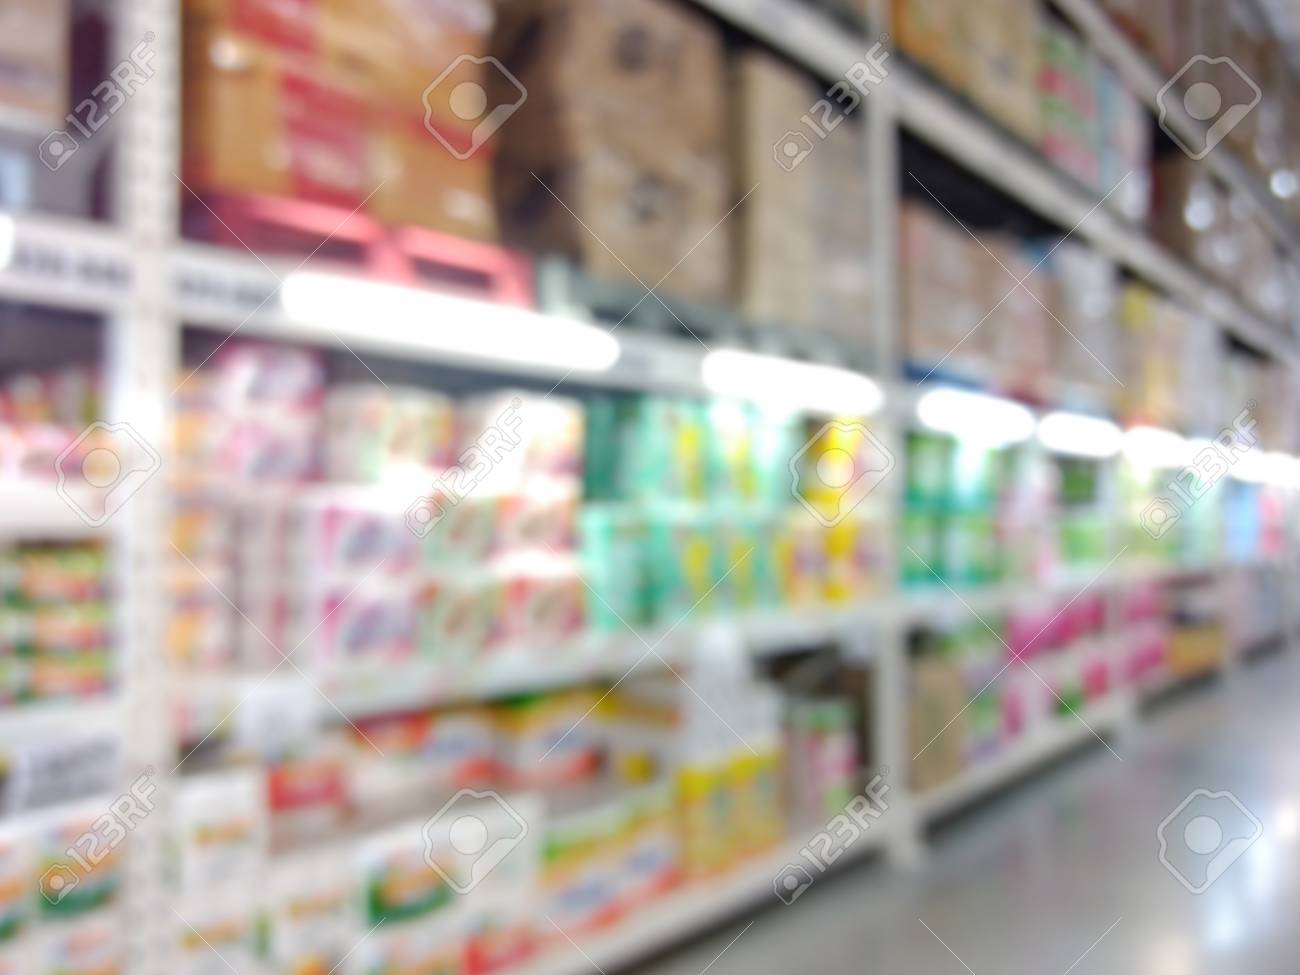 Wholesale Goods On Shelves Blurred Background Stock Photo